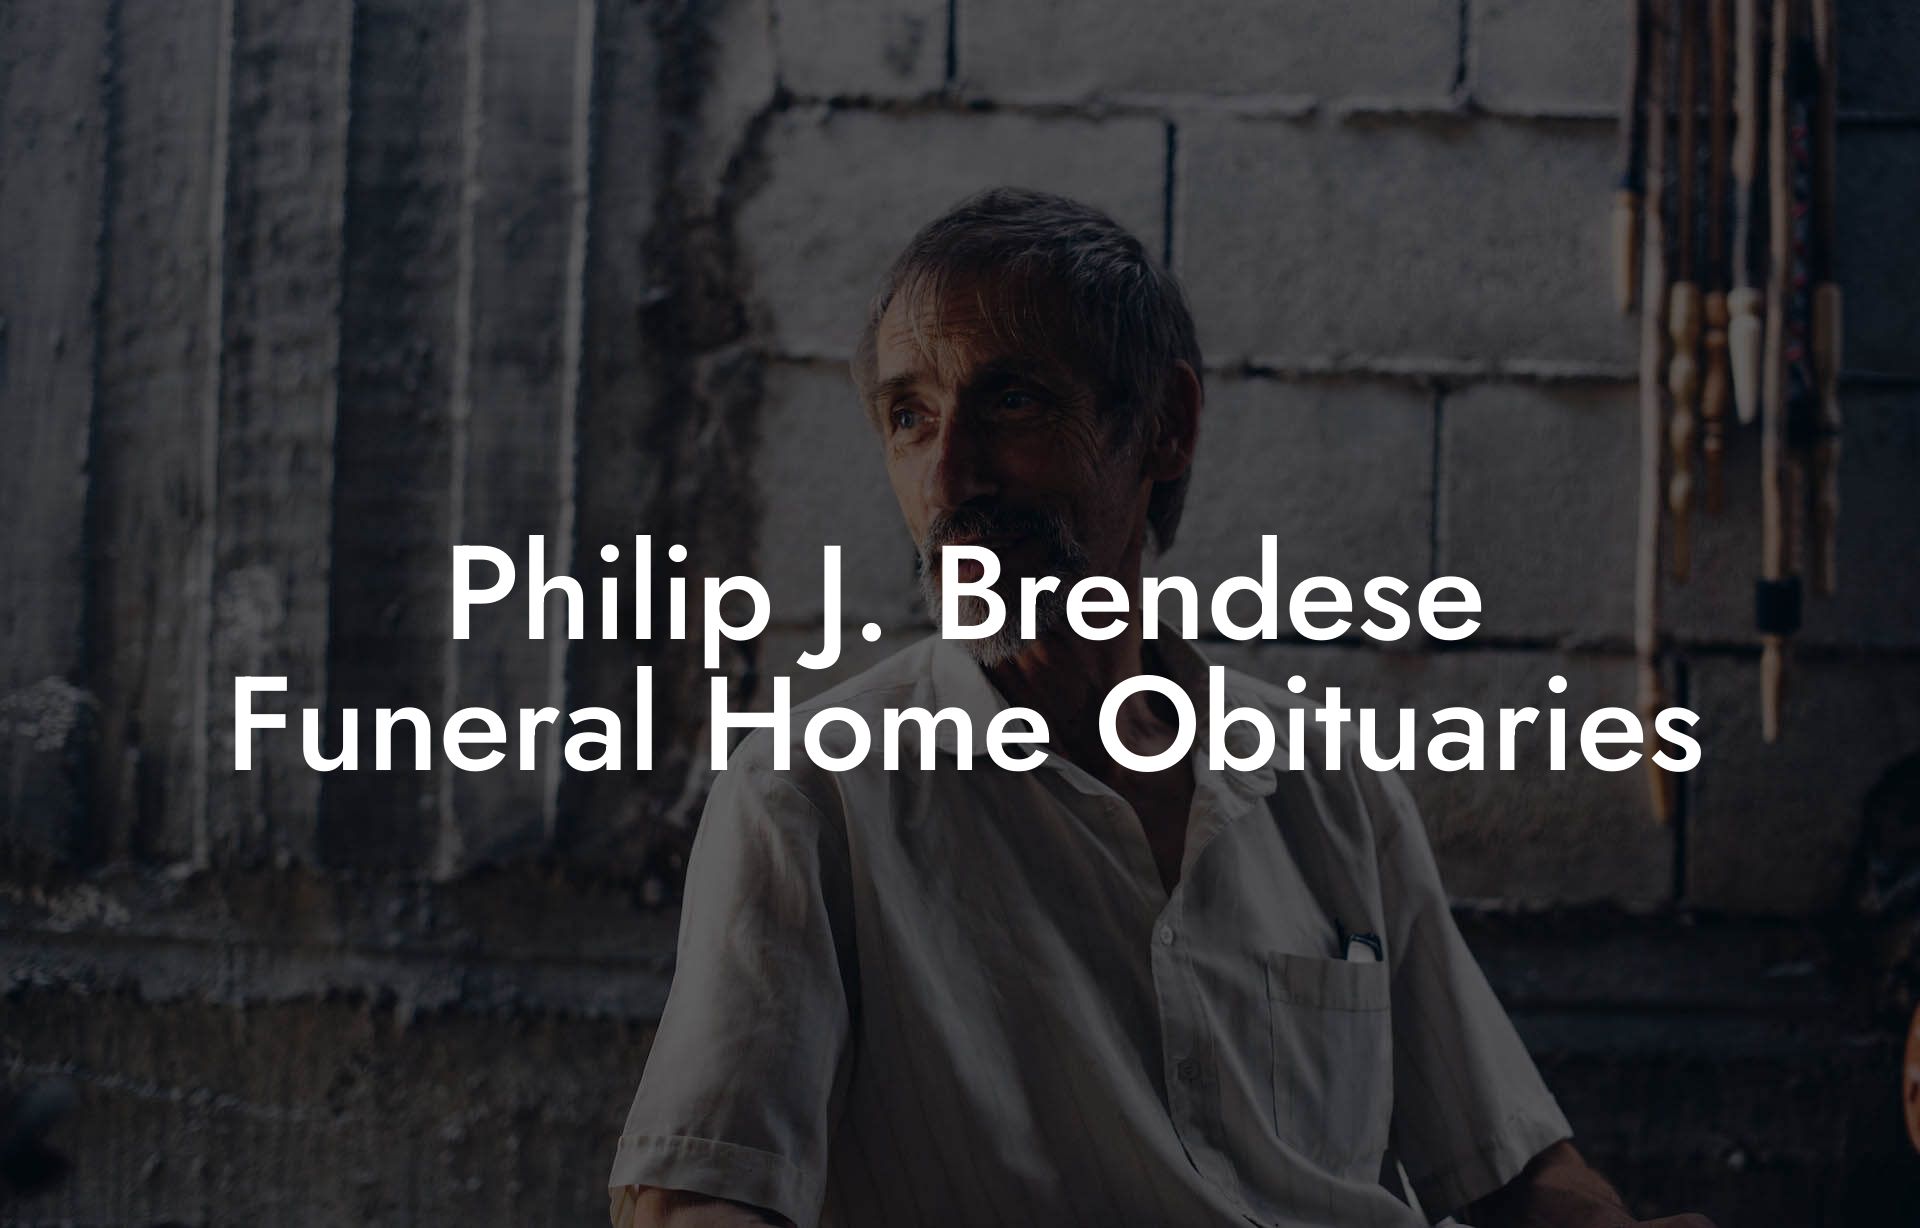 Philip J. Brendese Funeral Home Obituaries